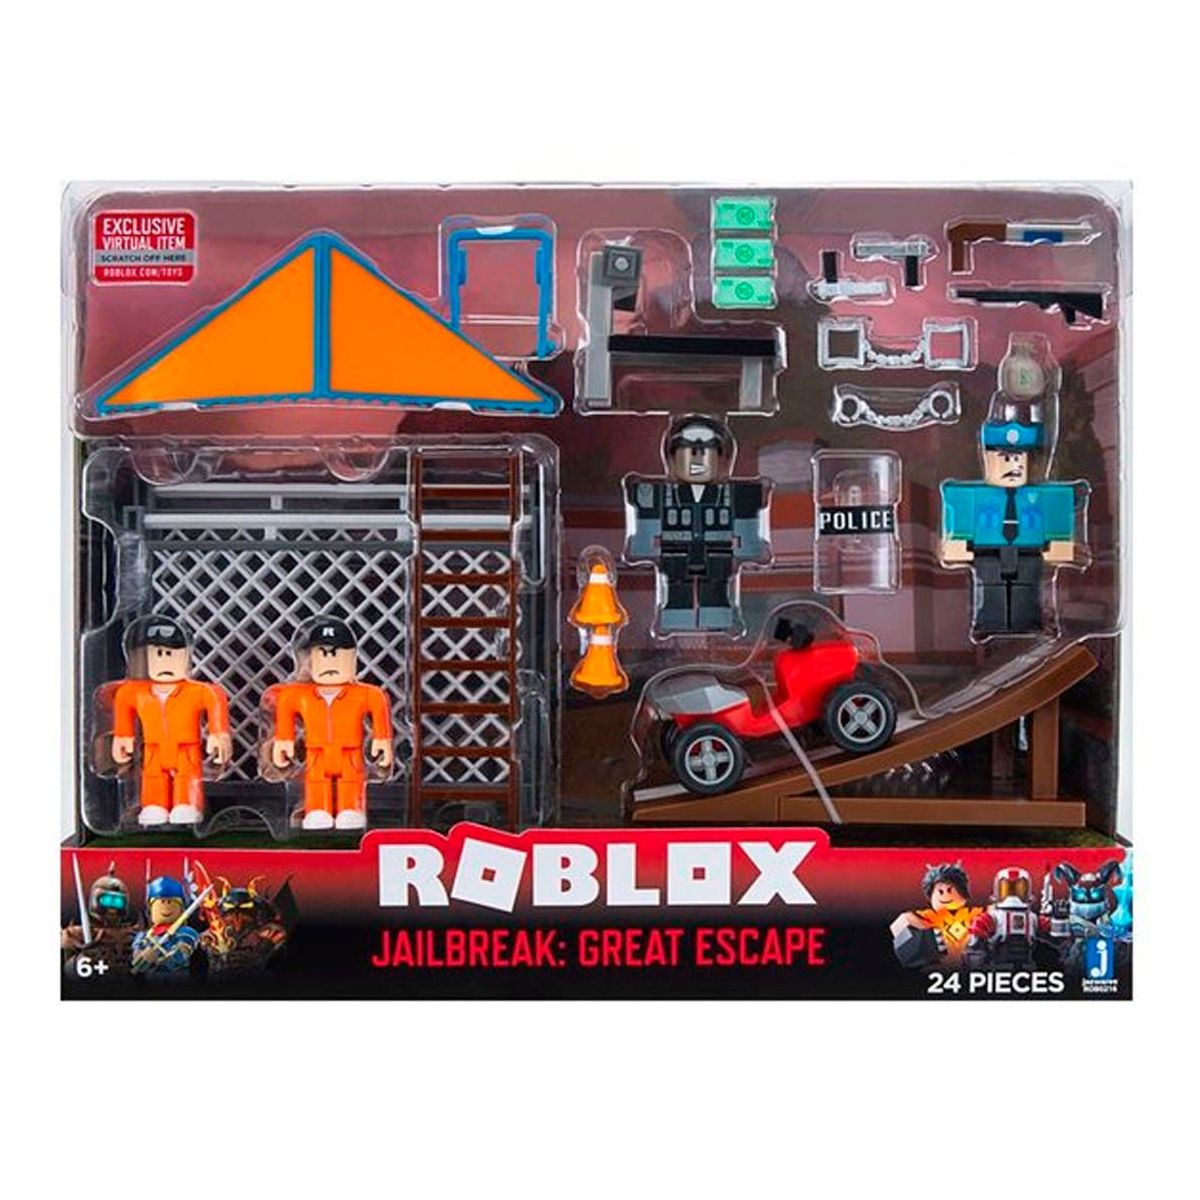 En Ucuz Roblox Oyun Seti Fiyatlari Ve Modelleri Cimri Com - roblox oyun konsolu